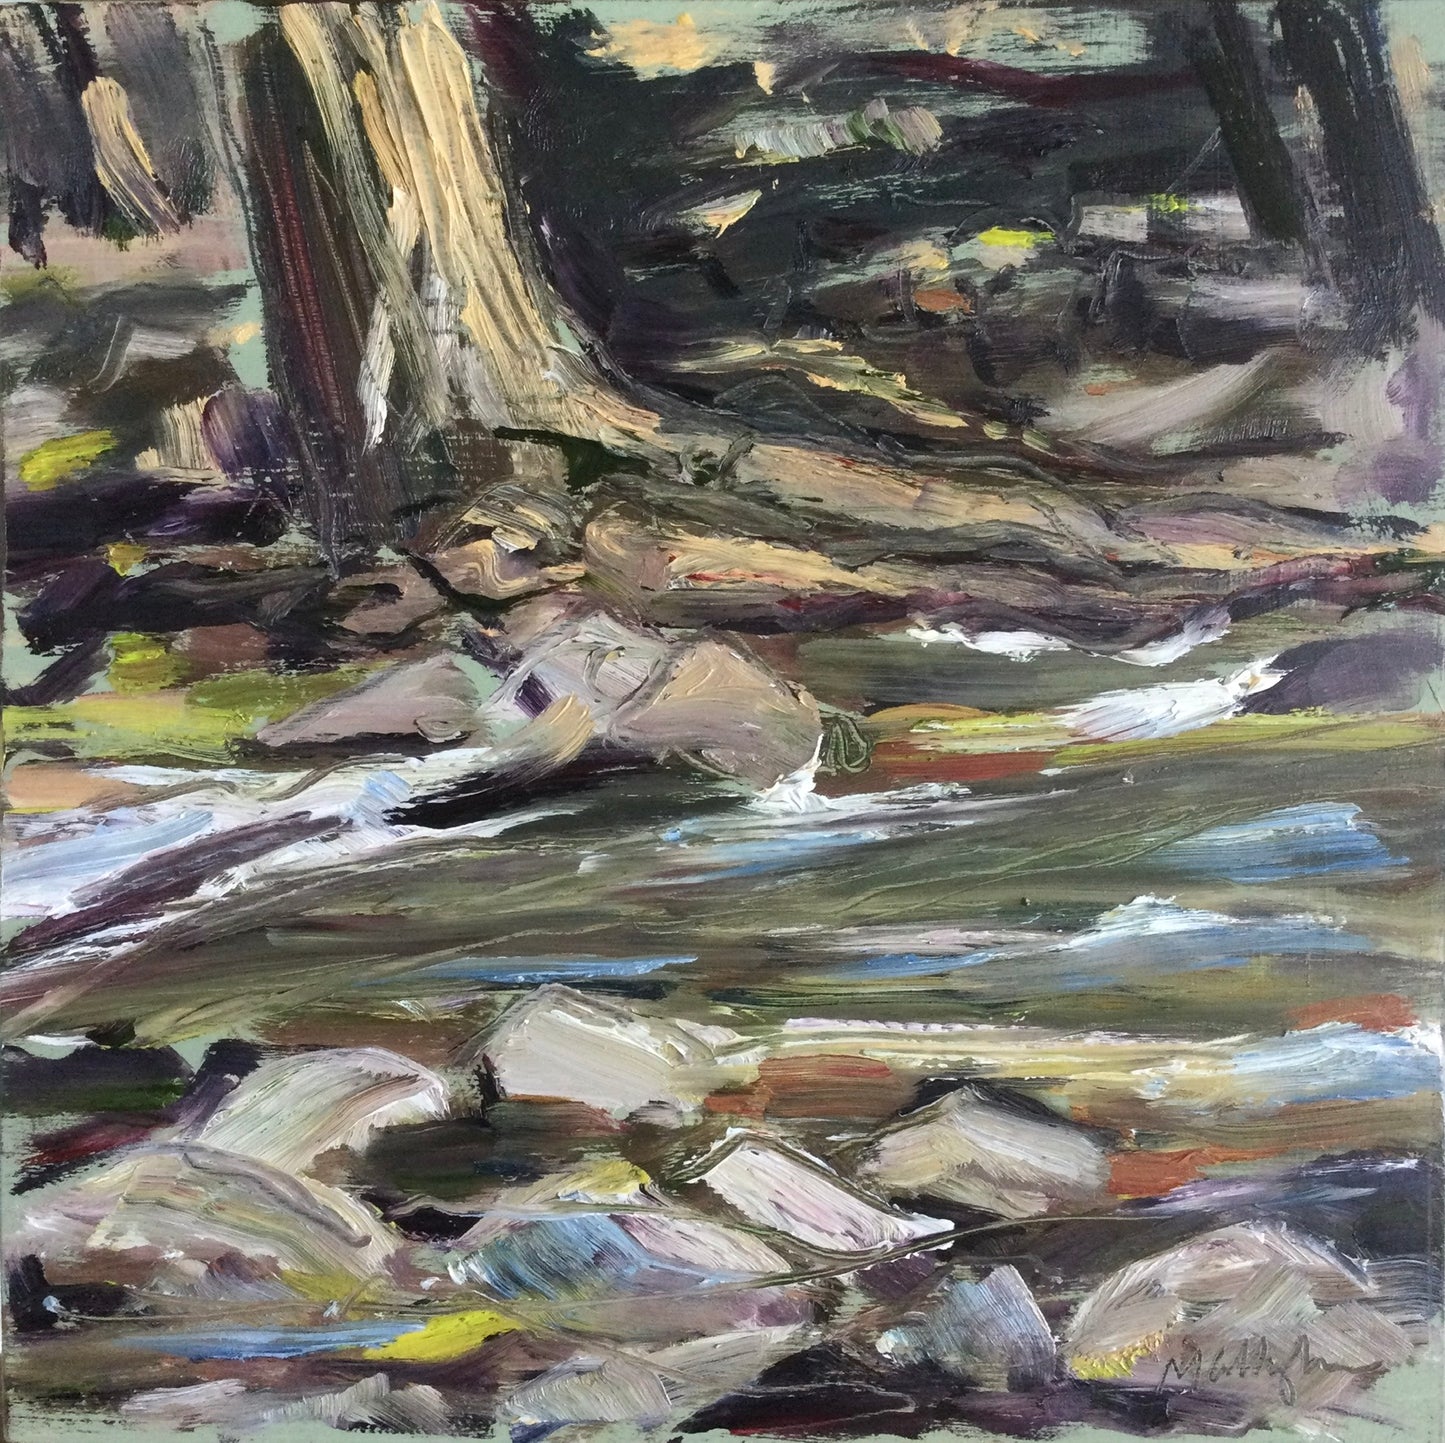 Trees, Rocks, and Water, (Bash Bish Trail), April 24th, 2021